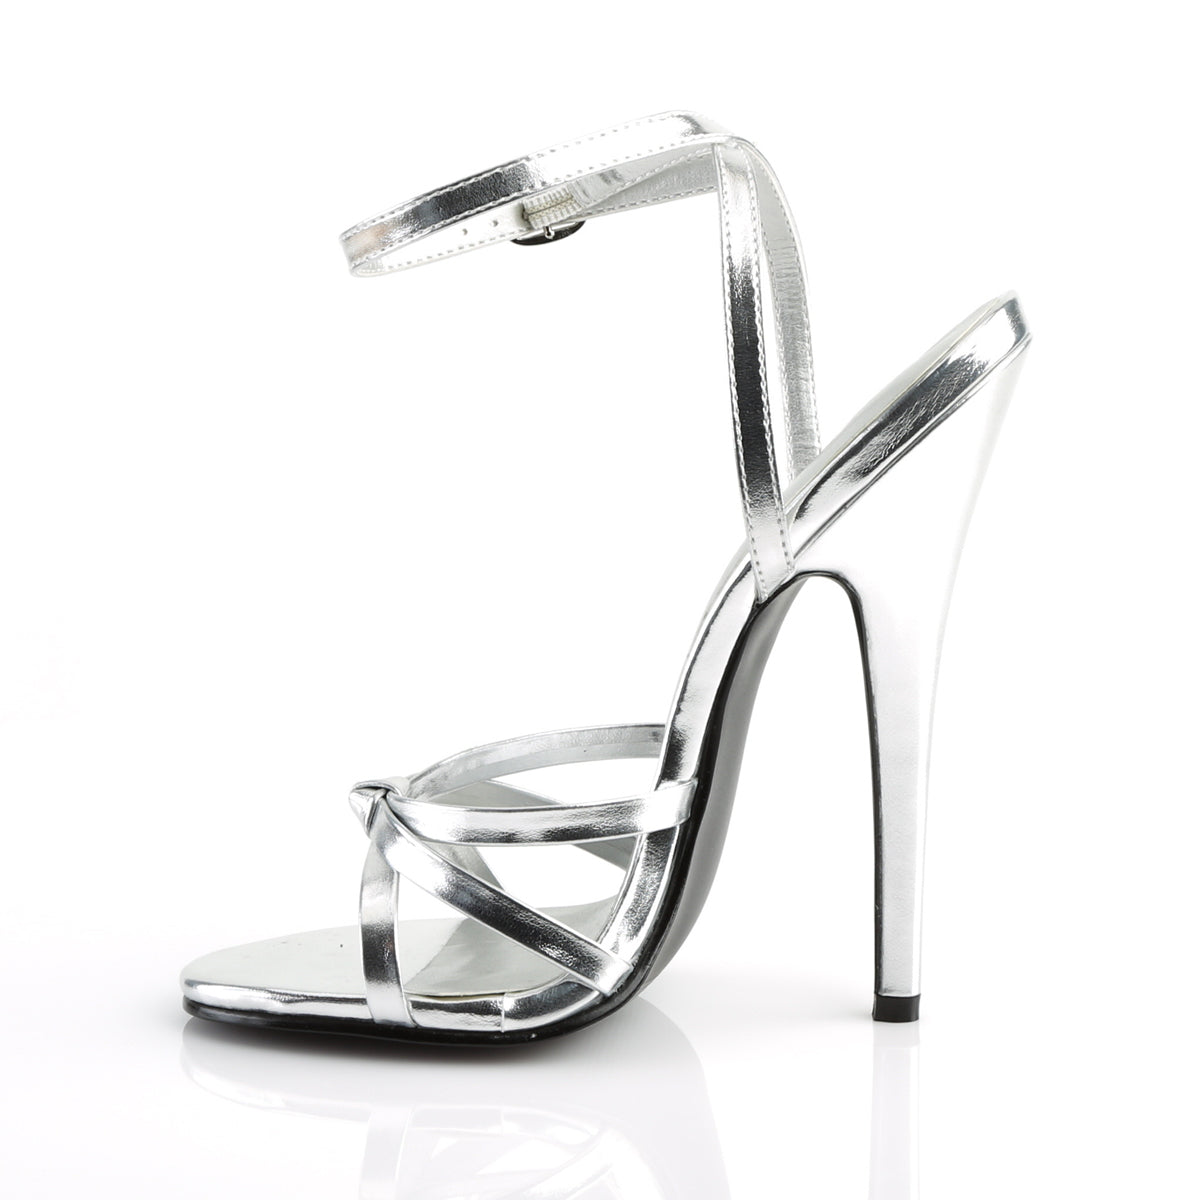 Devious Womens Sandals DOMINA-108 Silver Metallic Pu